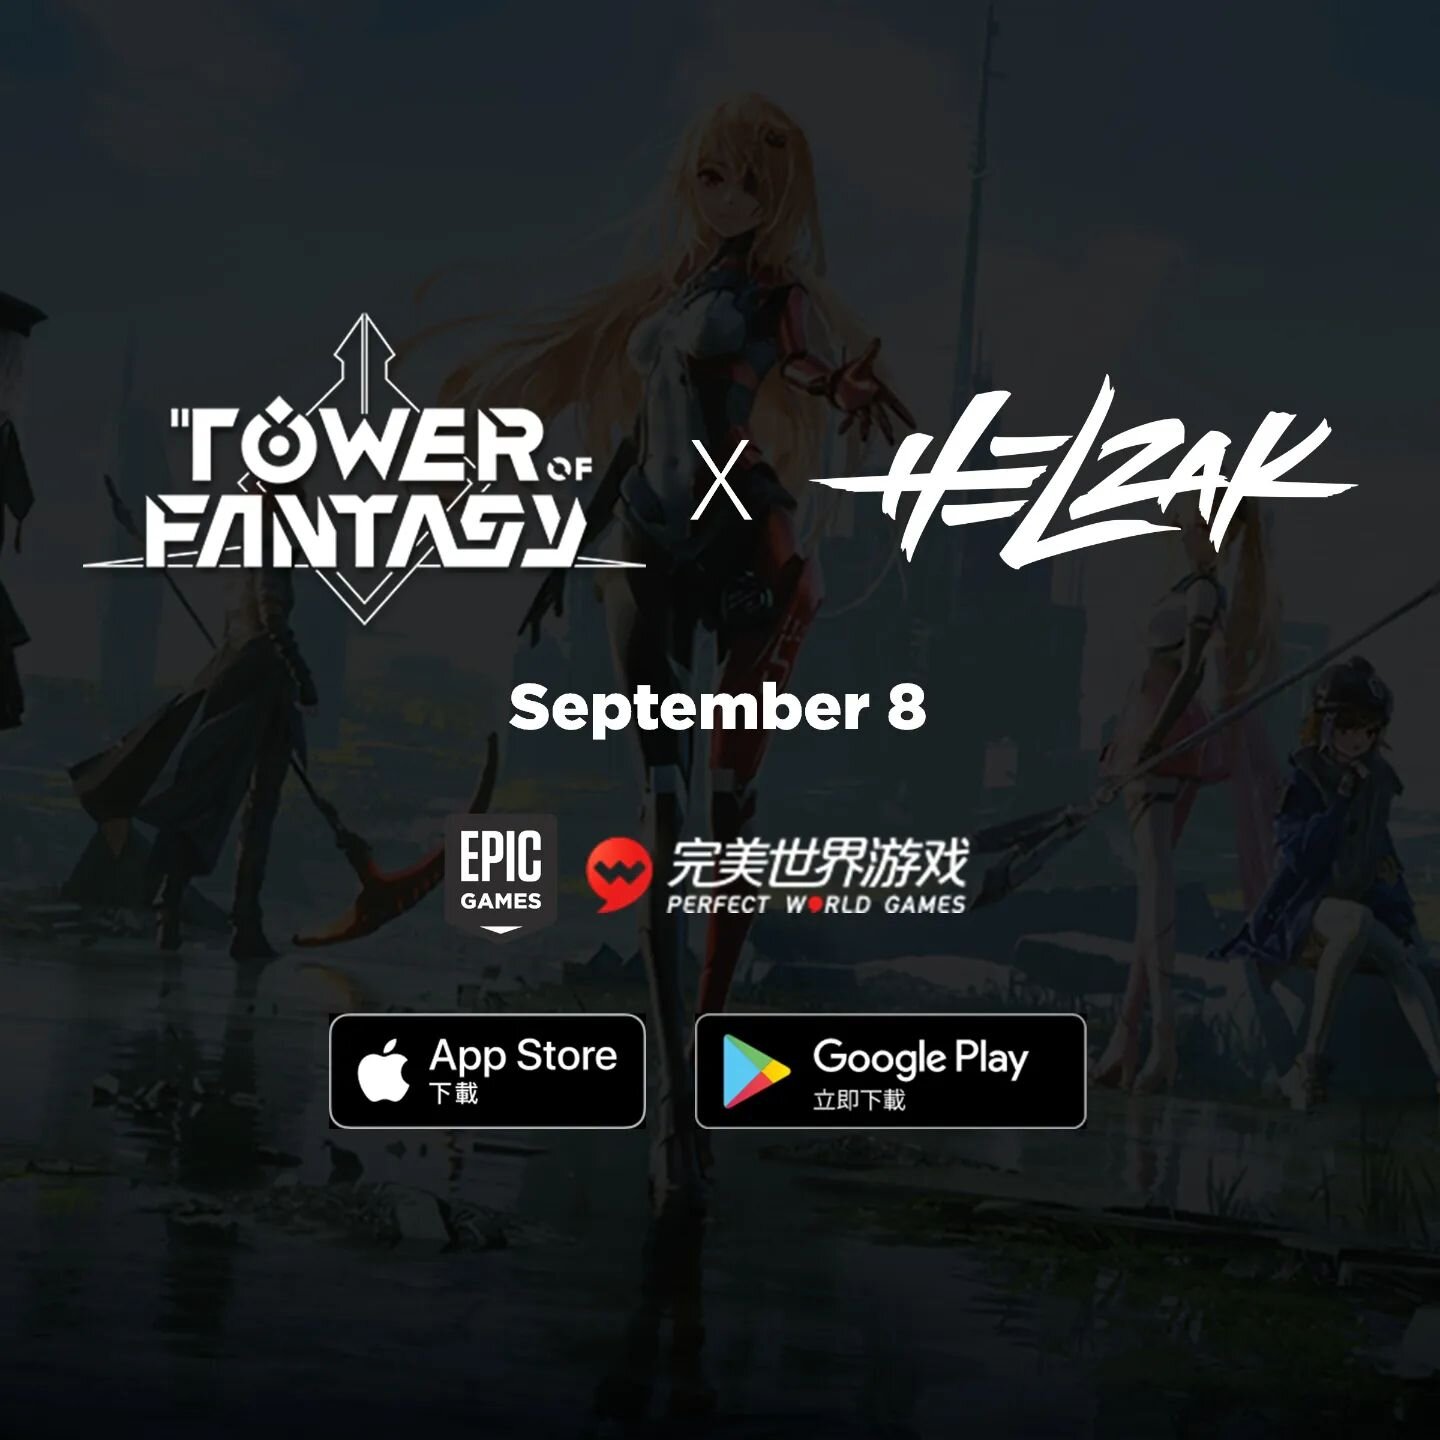 Coming soon...
@helzak_music @epicgames 

https://store.epicgames.com/fr/p/tower-of-fantasy